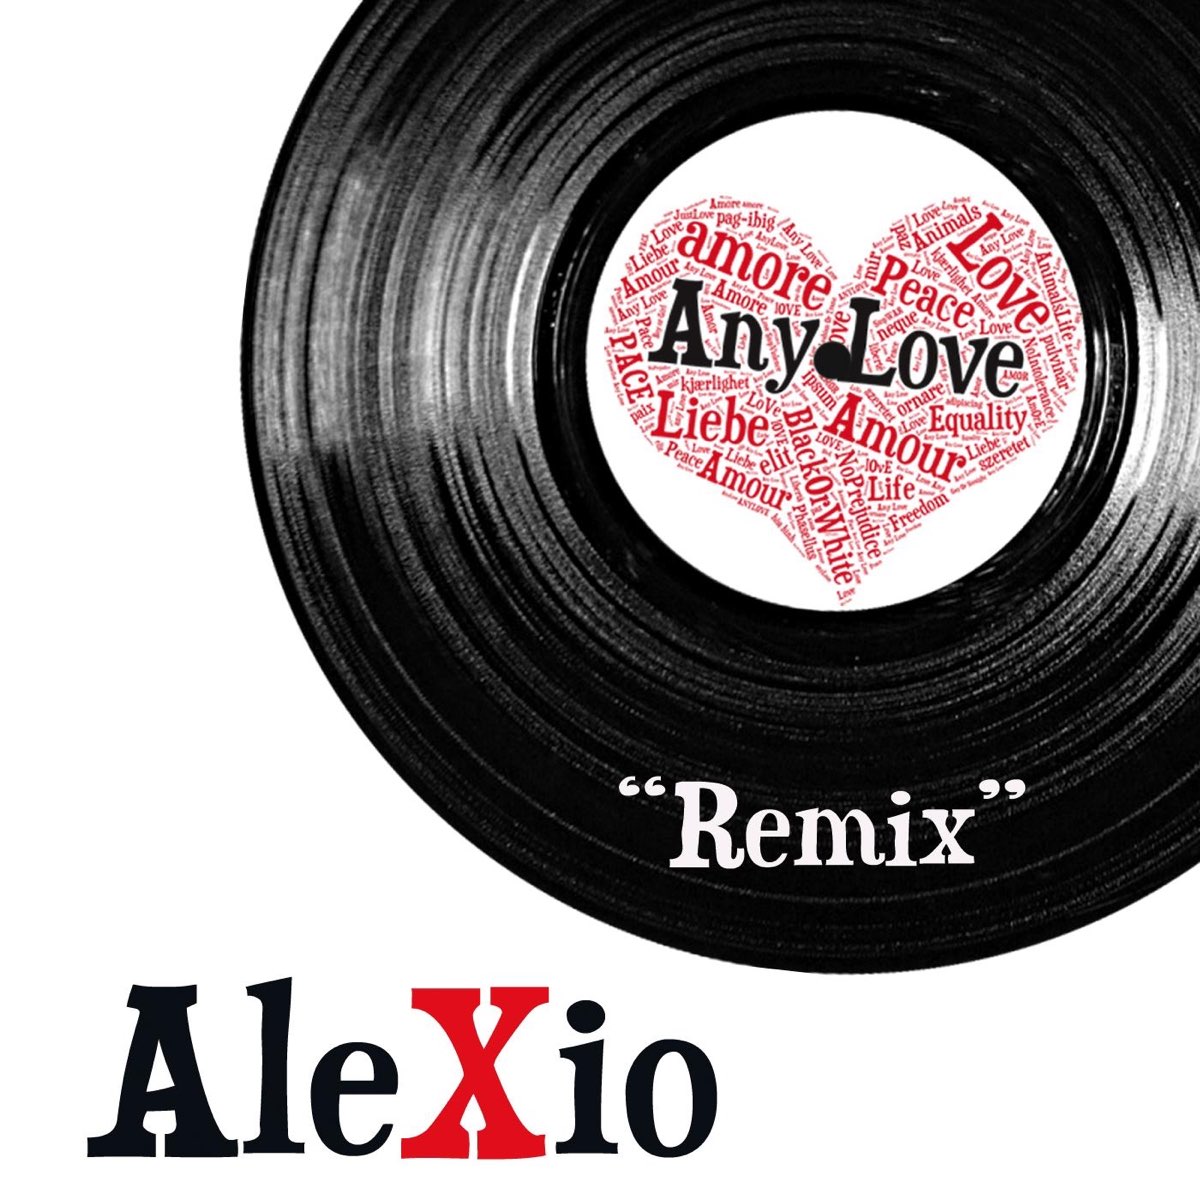 Remix love 1. Love Remix. Lovely песня ремикс. Любимые Remix. Any Love.